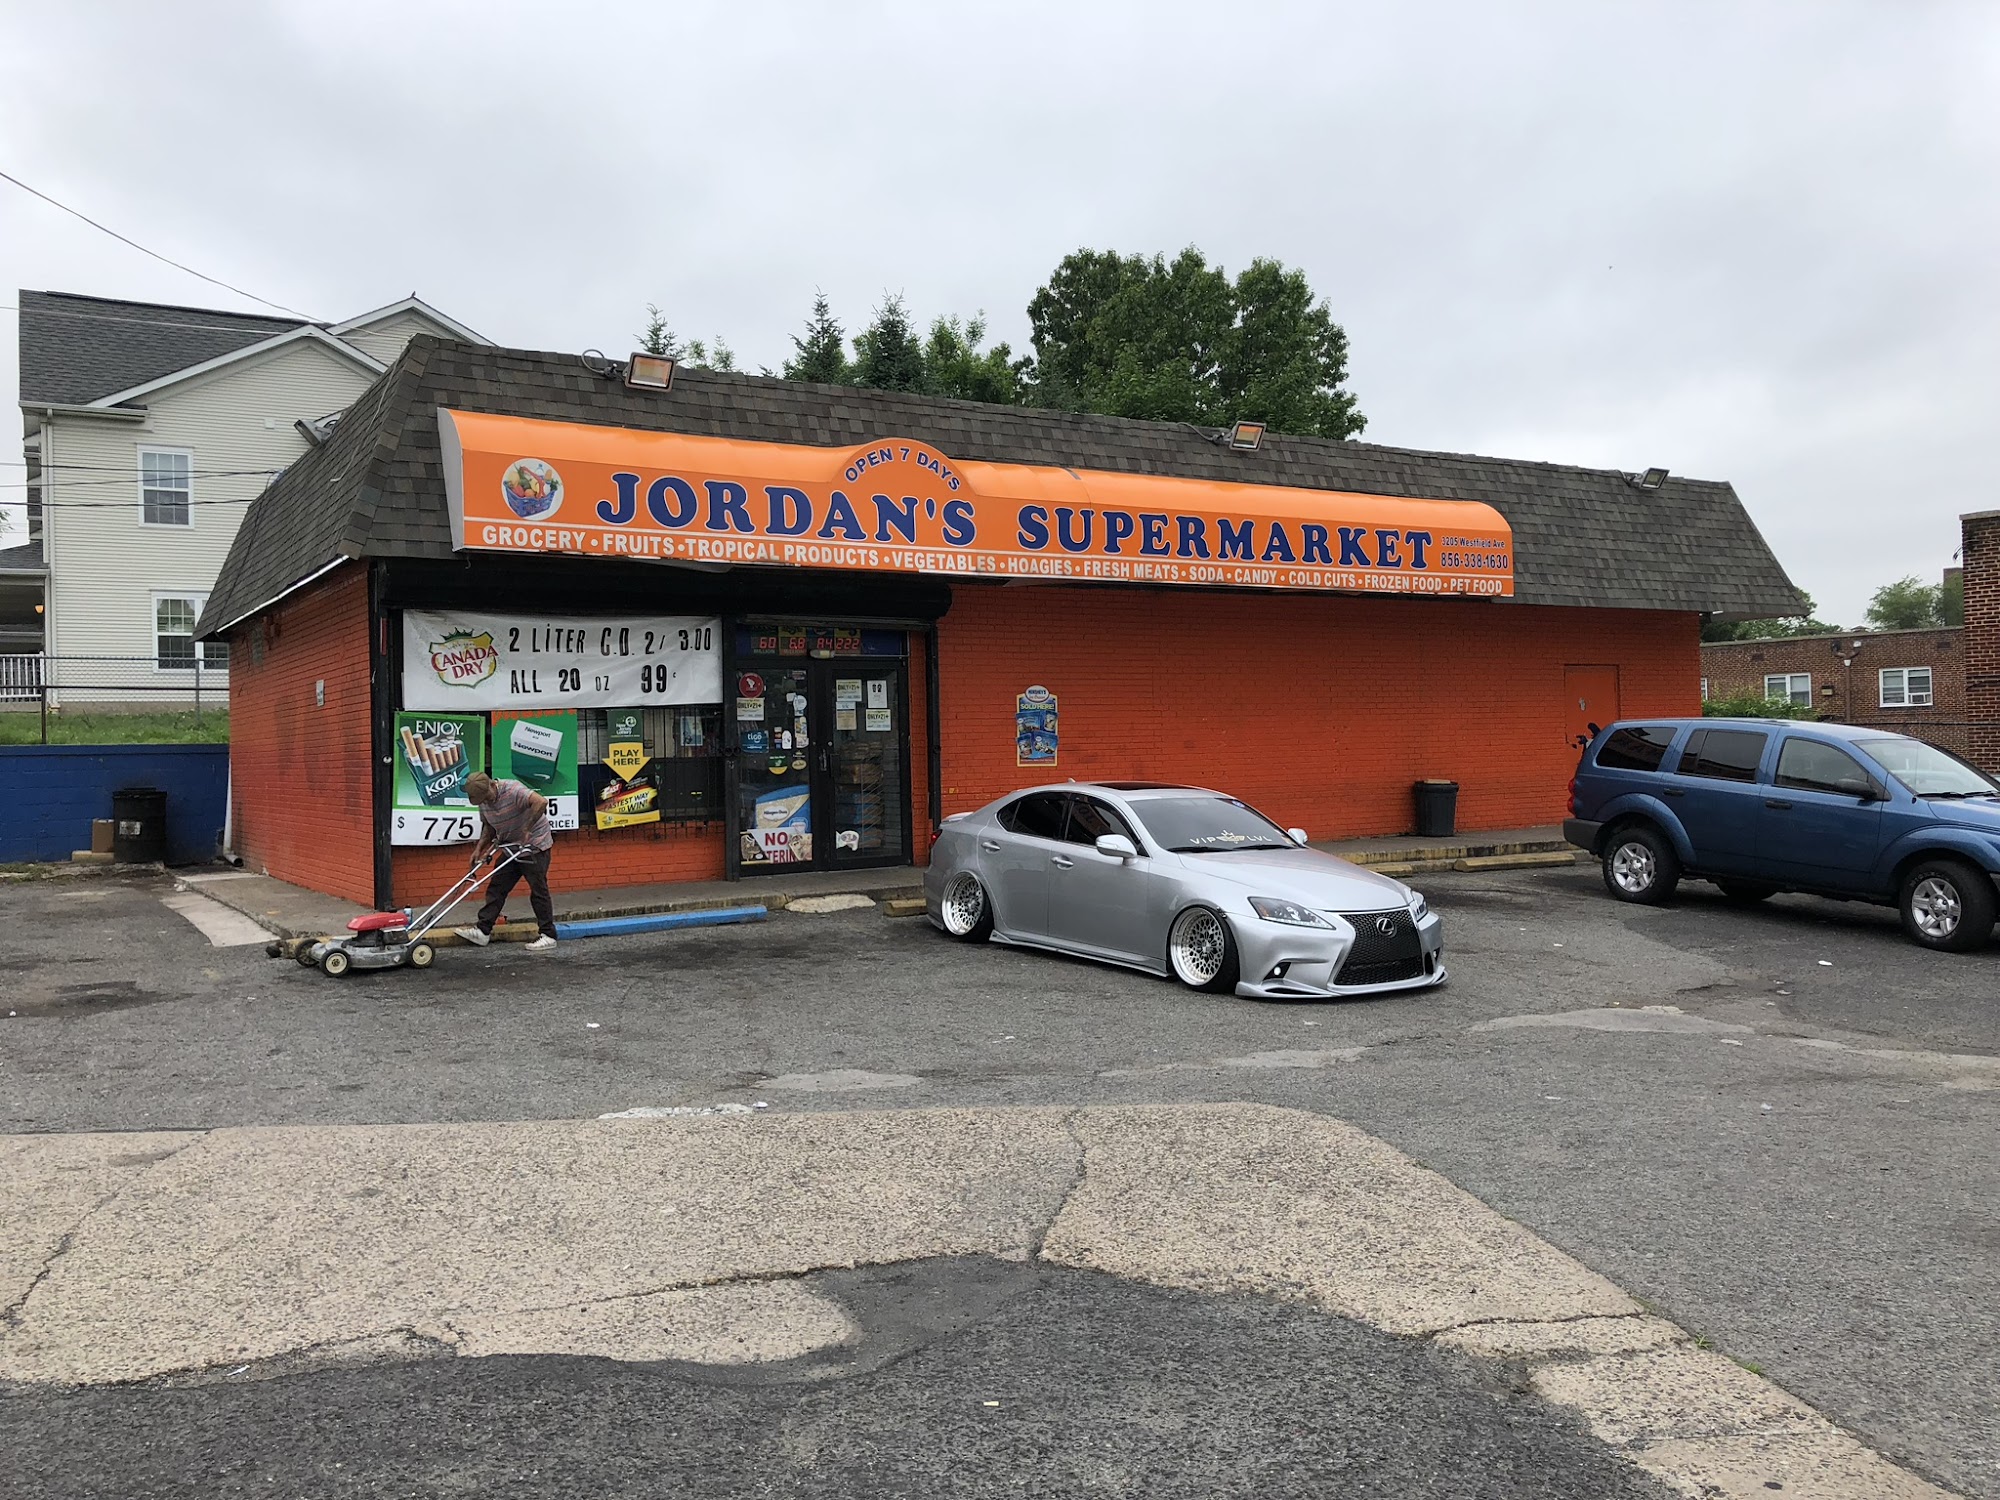 Jordan's Supermarket